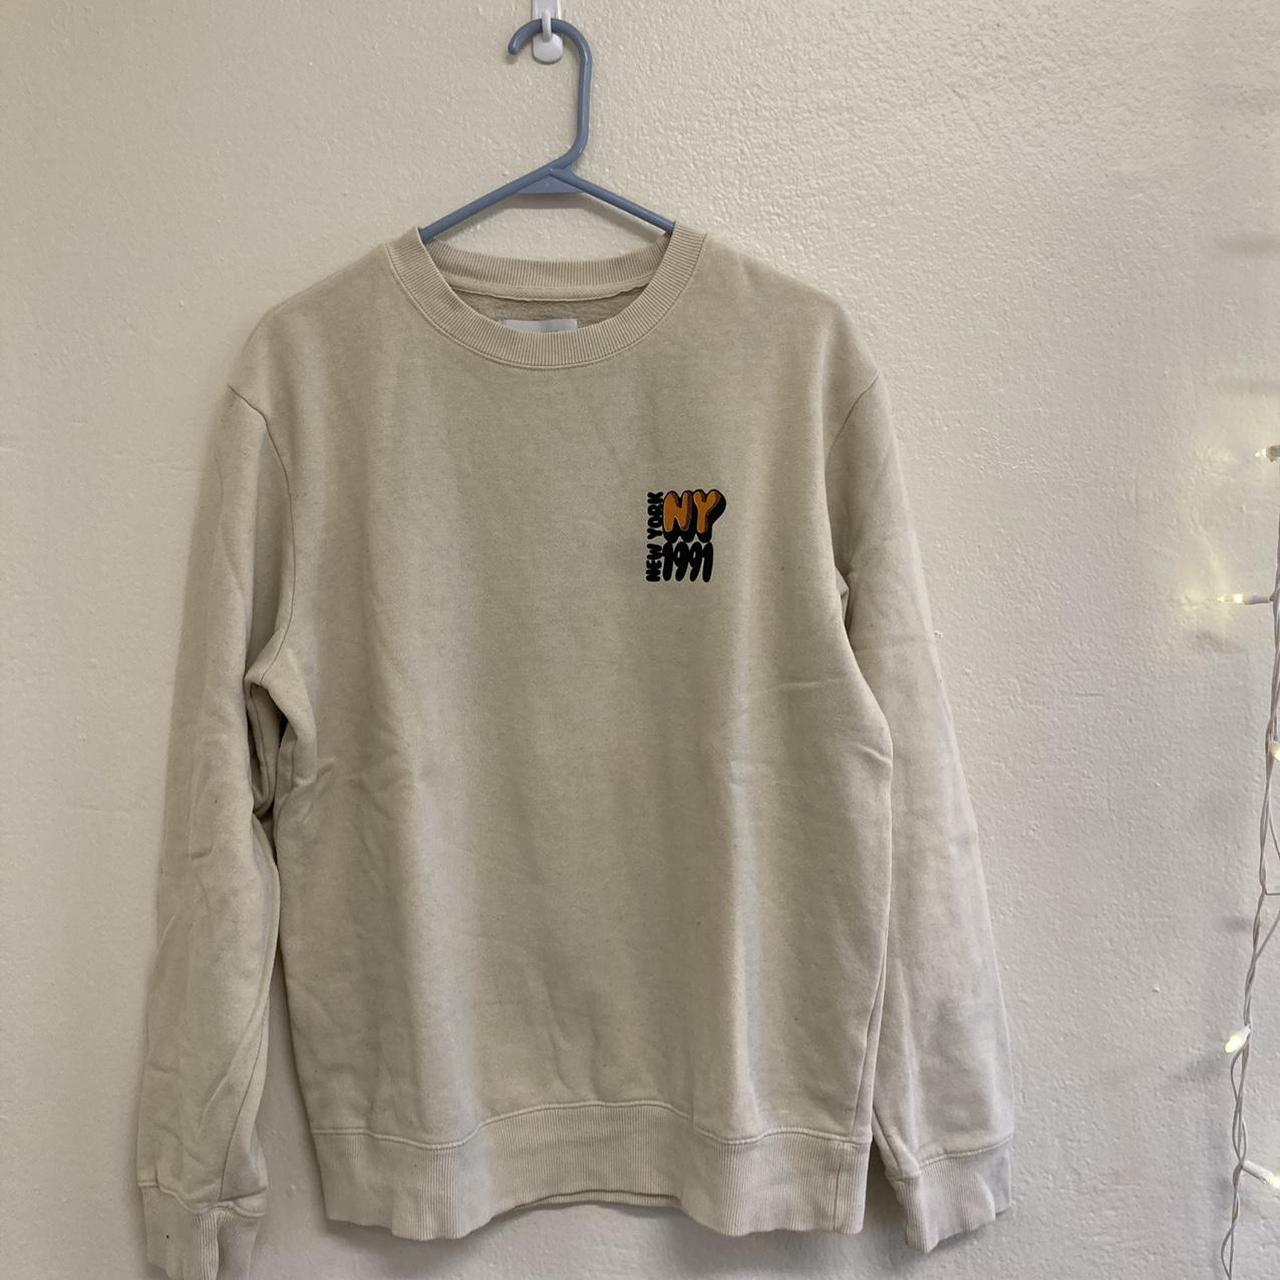 Product Image 3 - Cotton On NY Sweatshirt
• Tagged